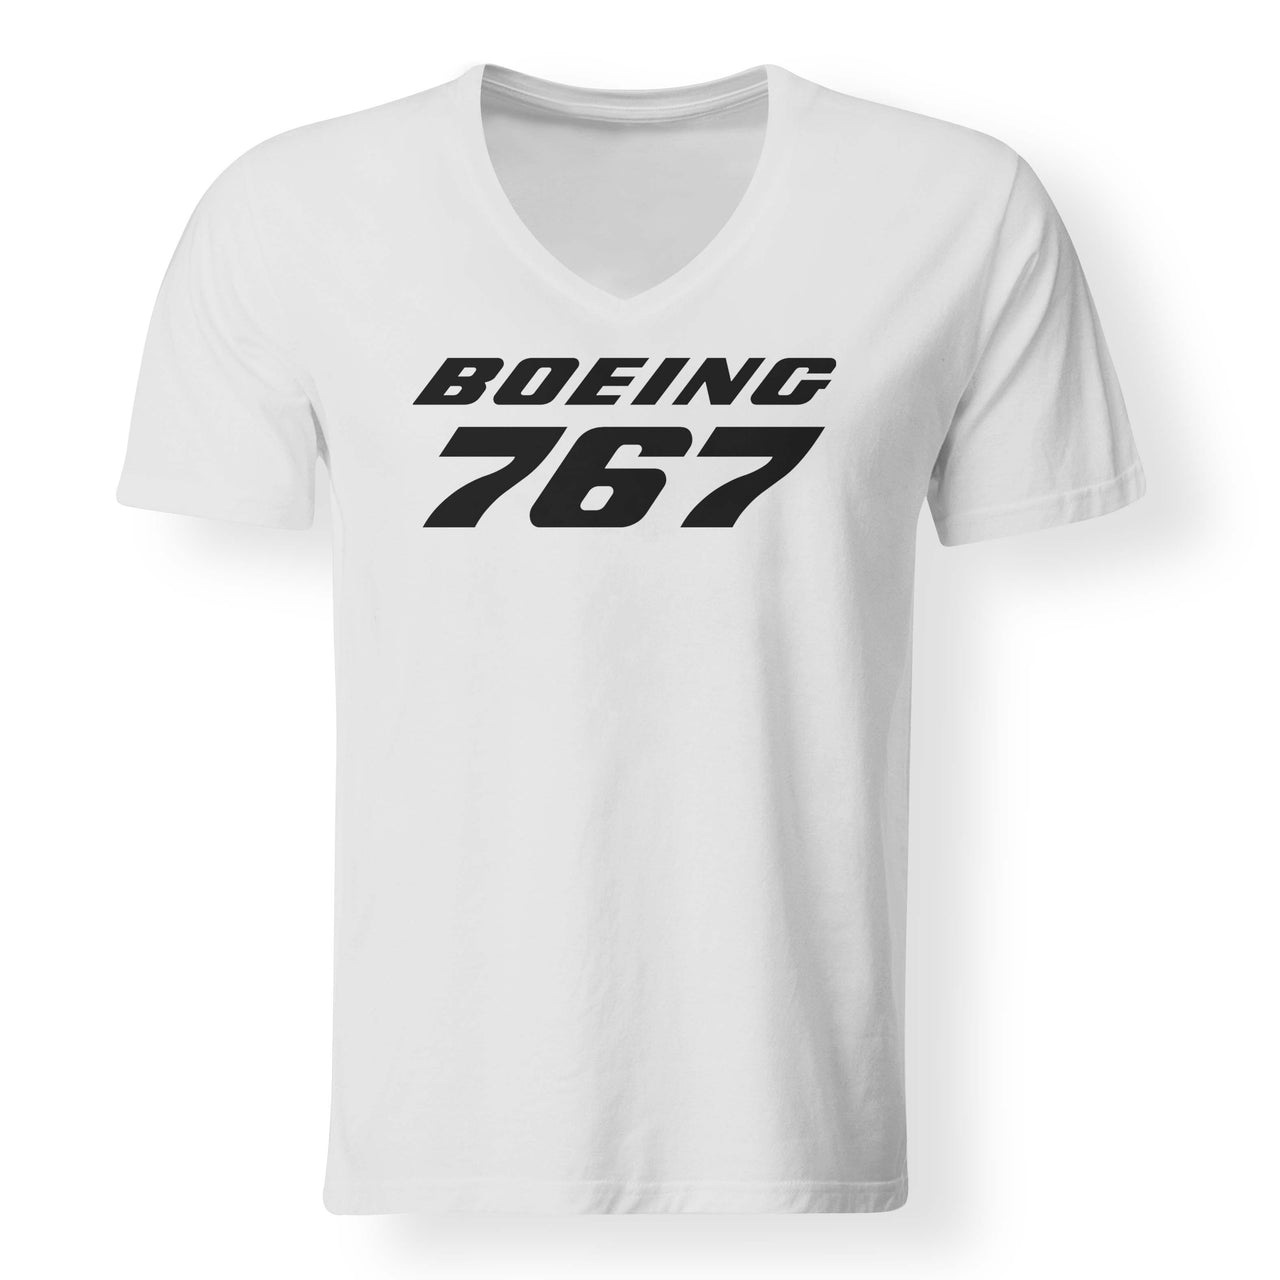 Boeing 767 & Text Designed V-Neck T-Shirts